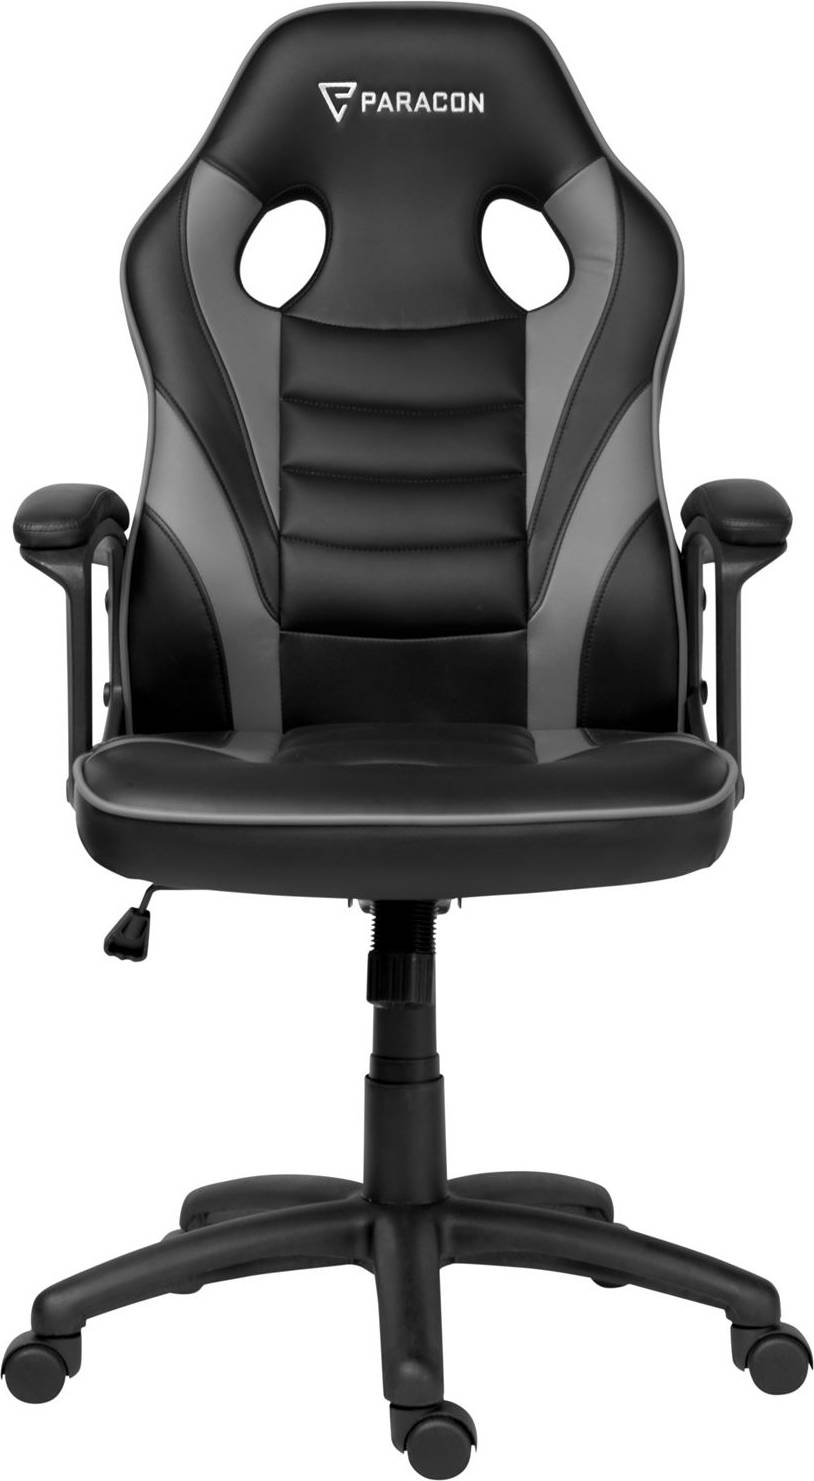  Bild på Paracon Squire Gaming Chair - Black/Grey gamingstol